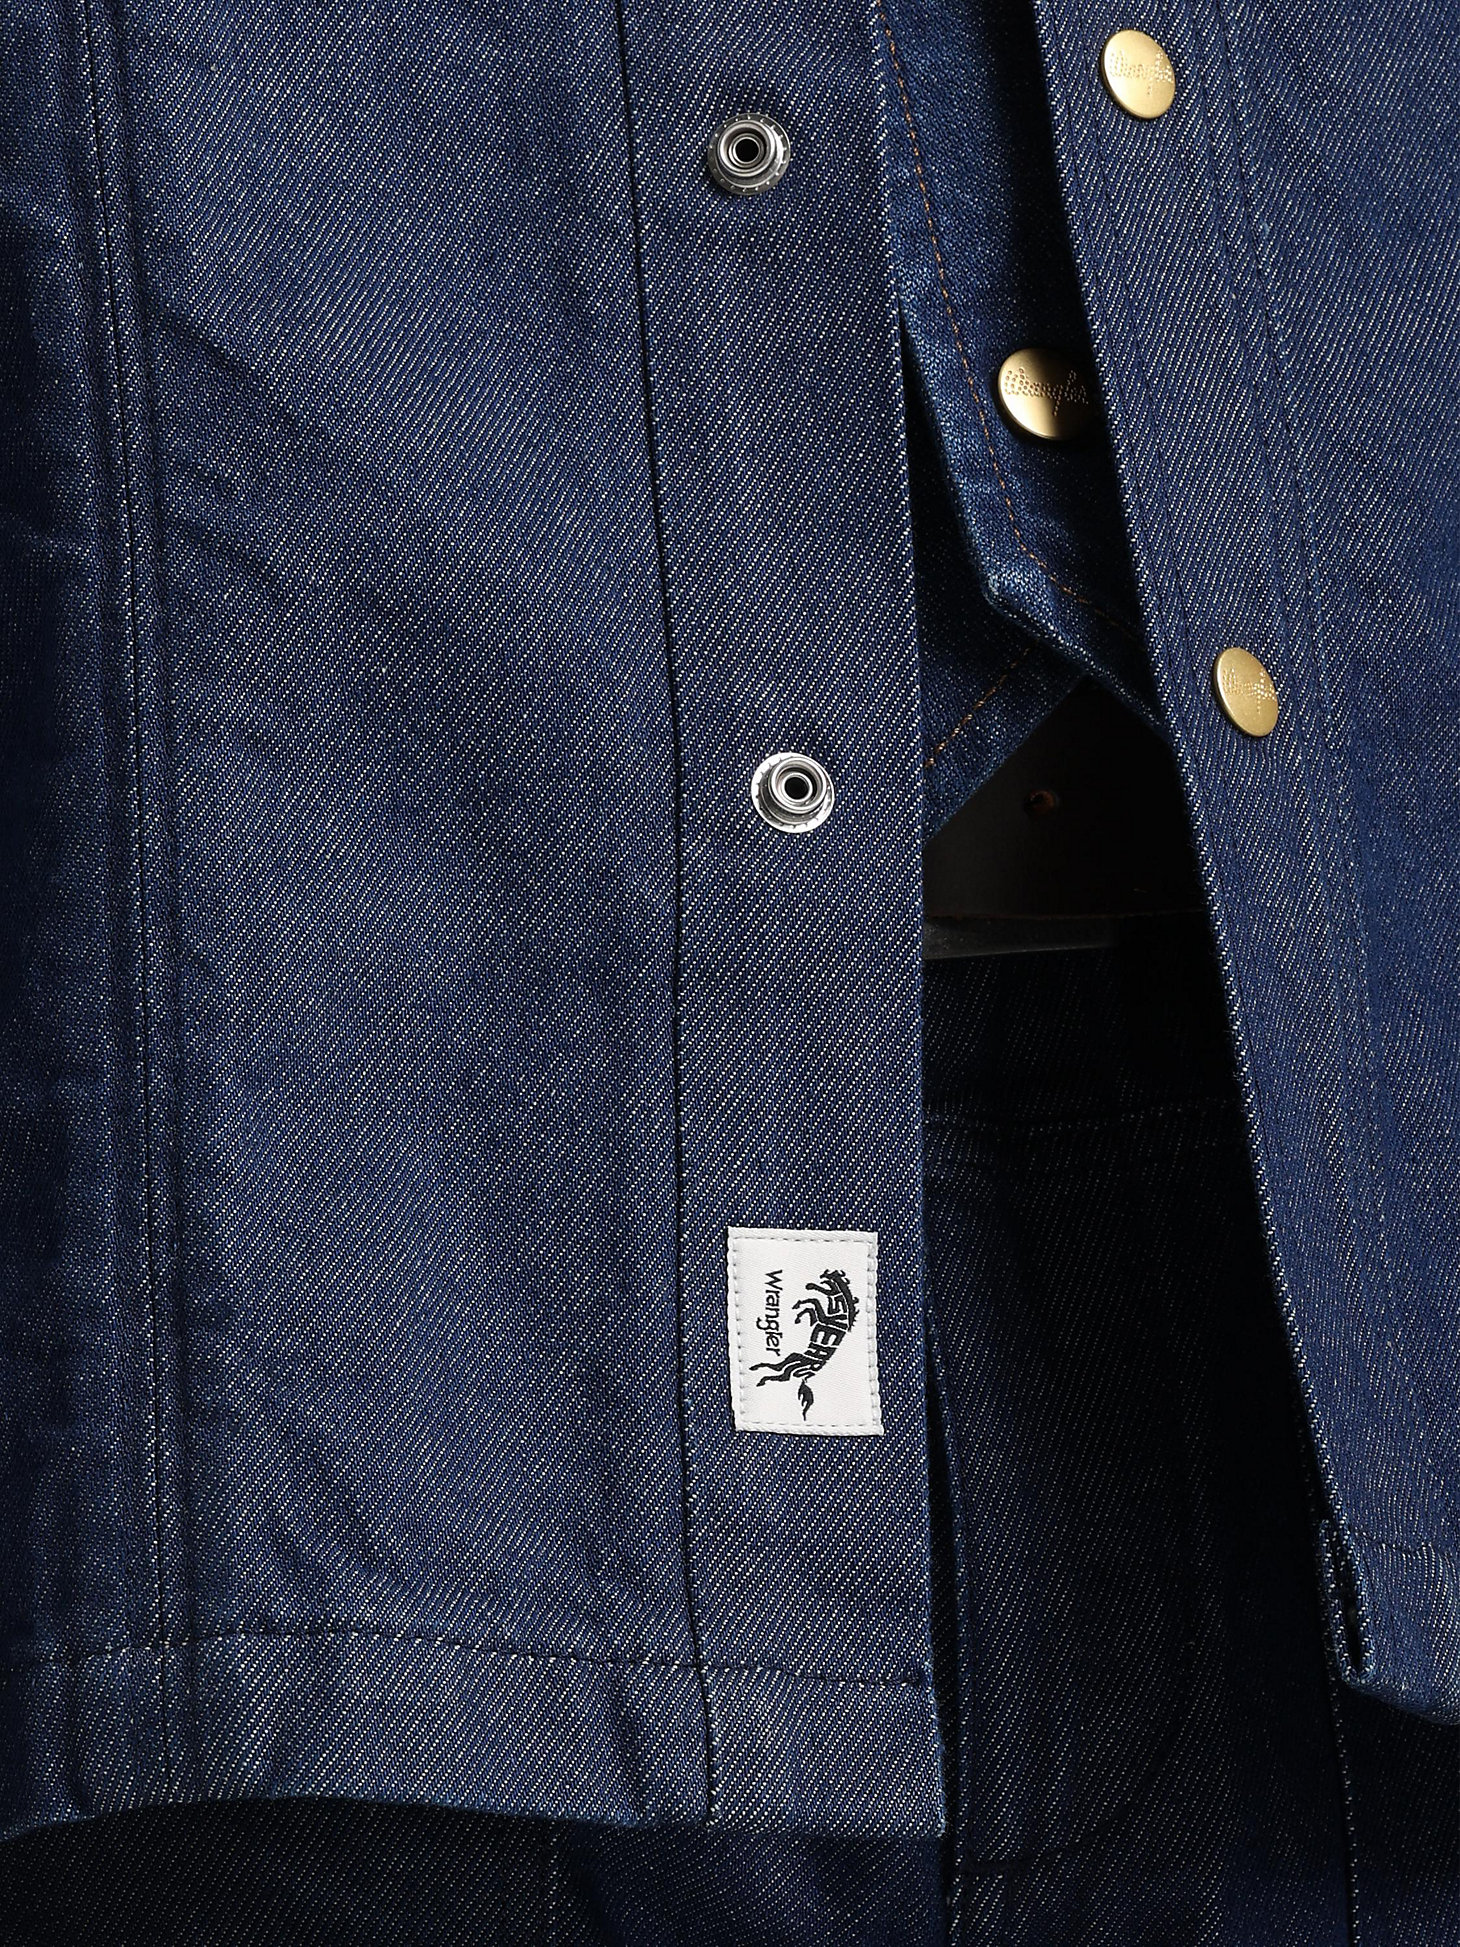 Wrangler X Leon Bridges Men's Denim Suit Jacket in Rinse Wash alternative view 5